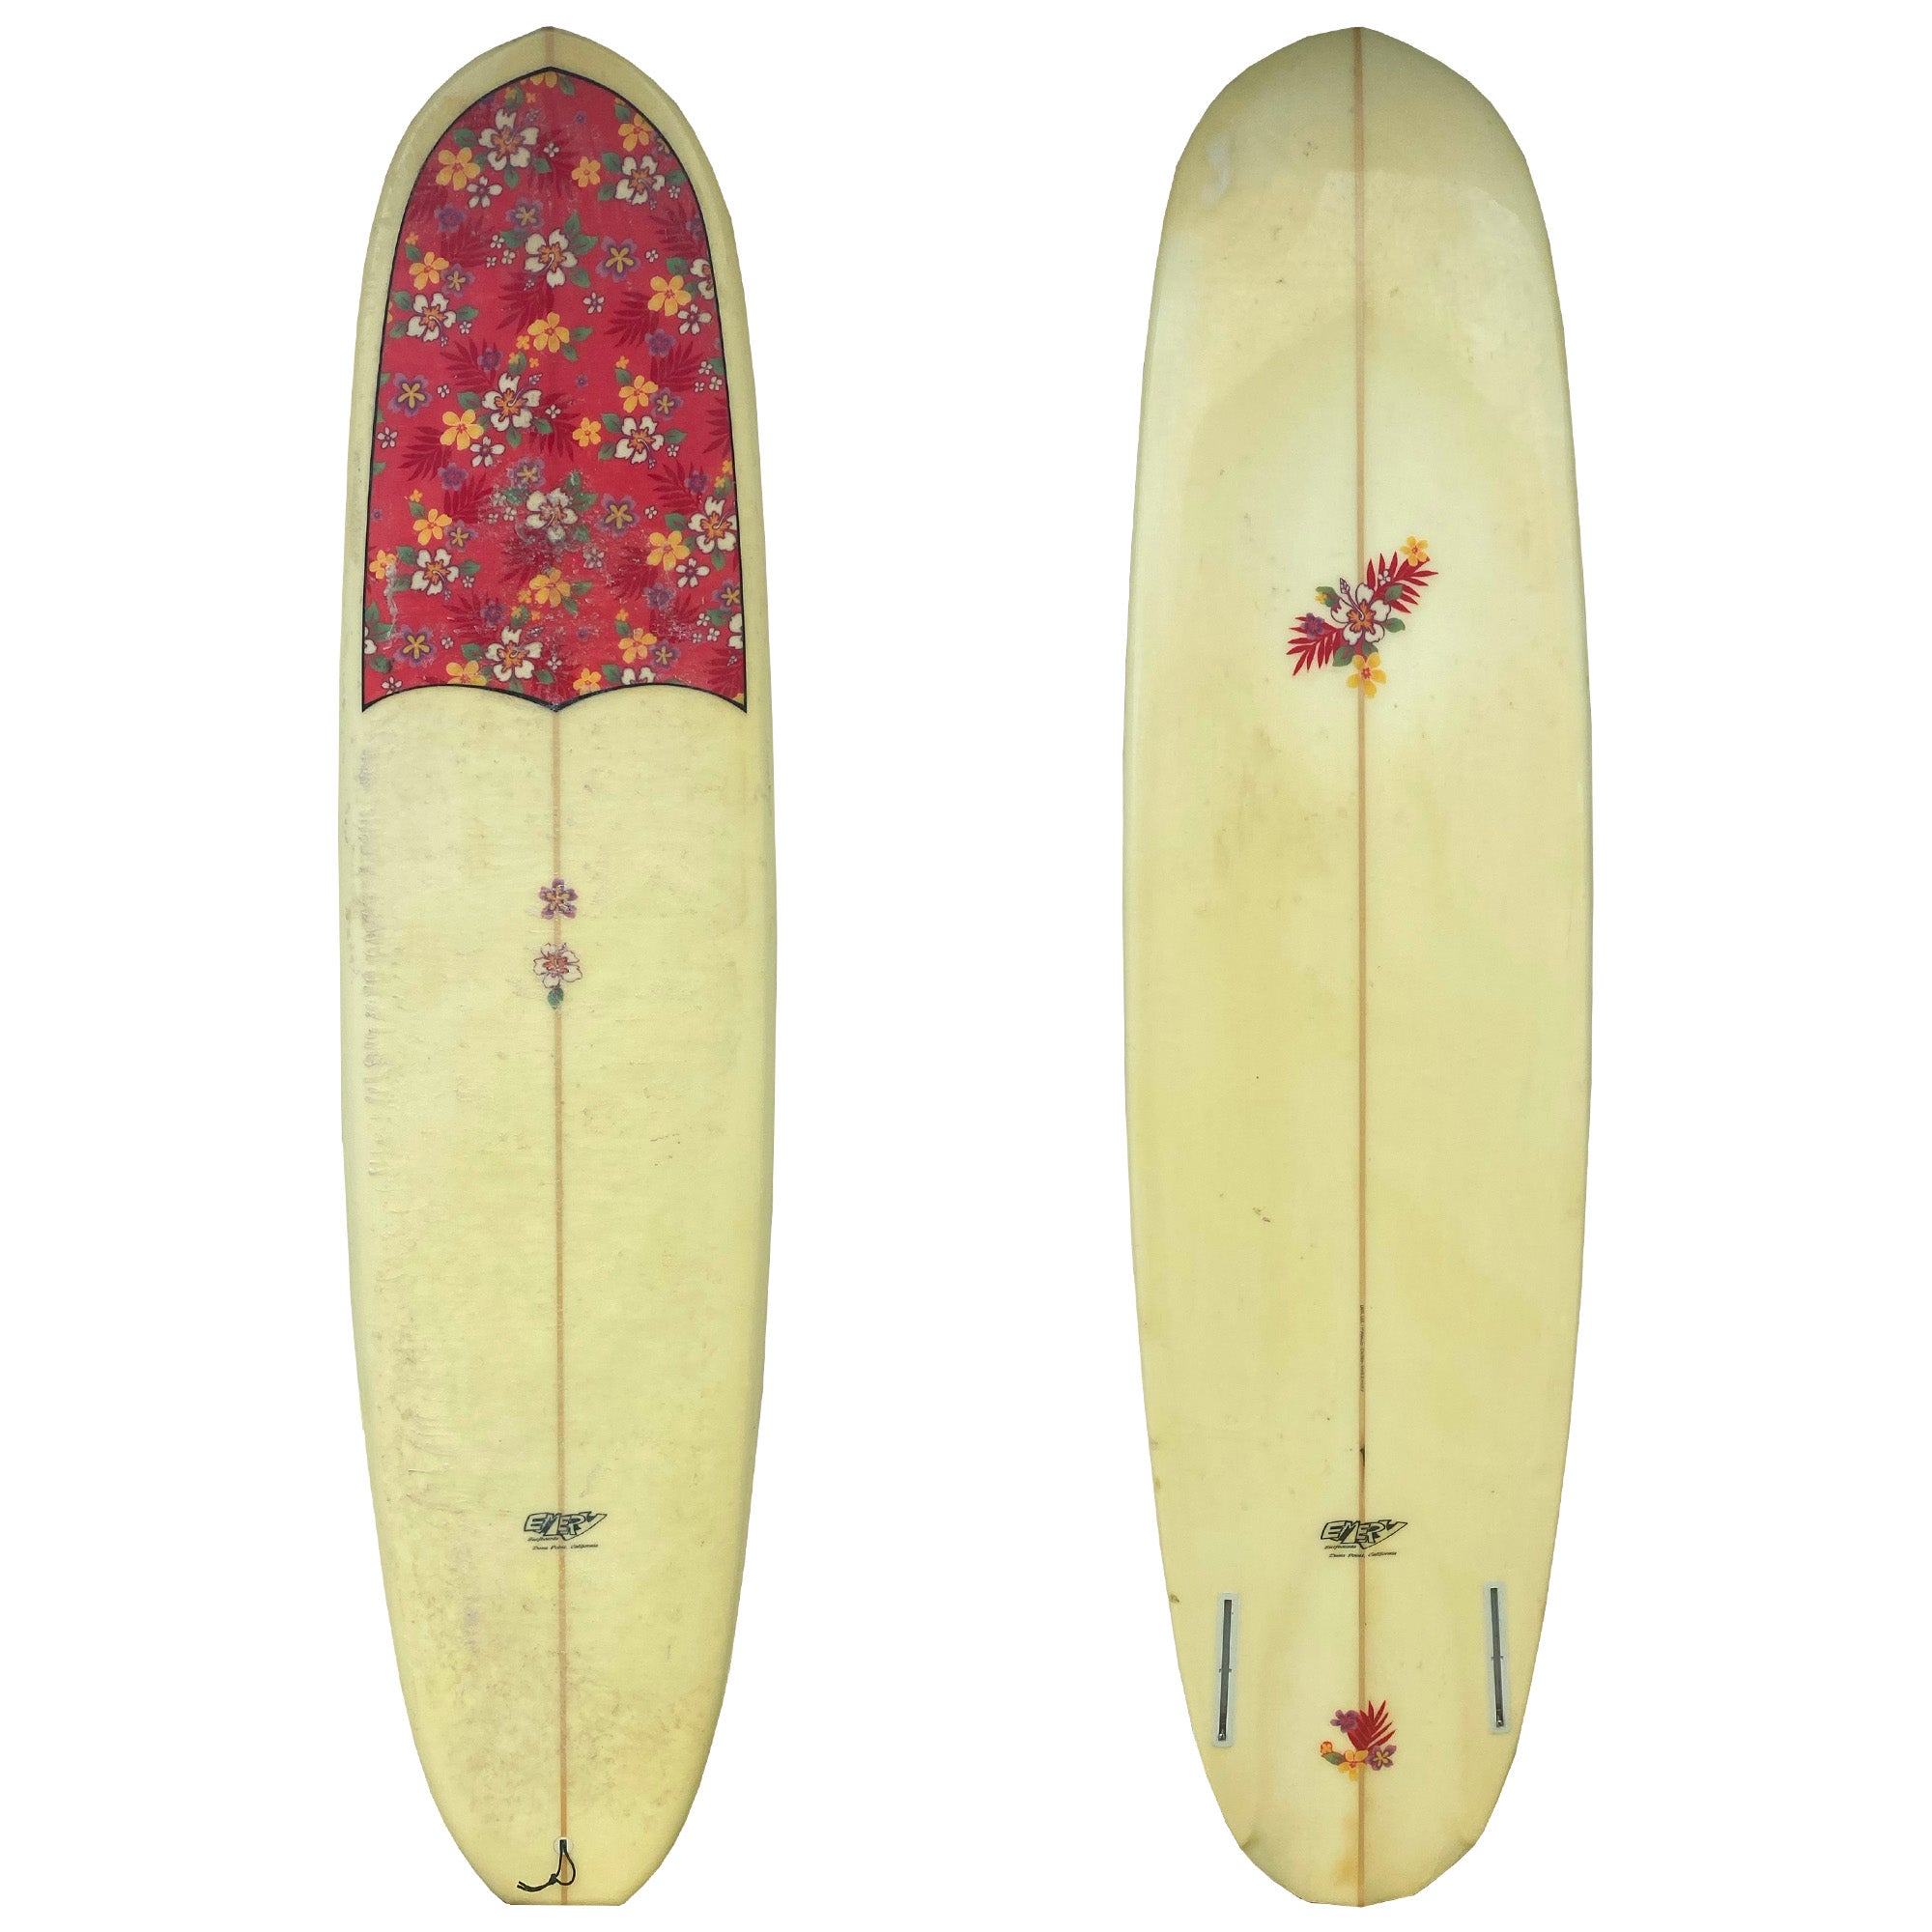 Emery 8'0 Longboard Consignment Surfboard